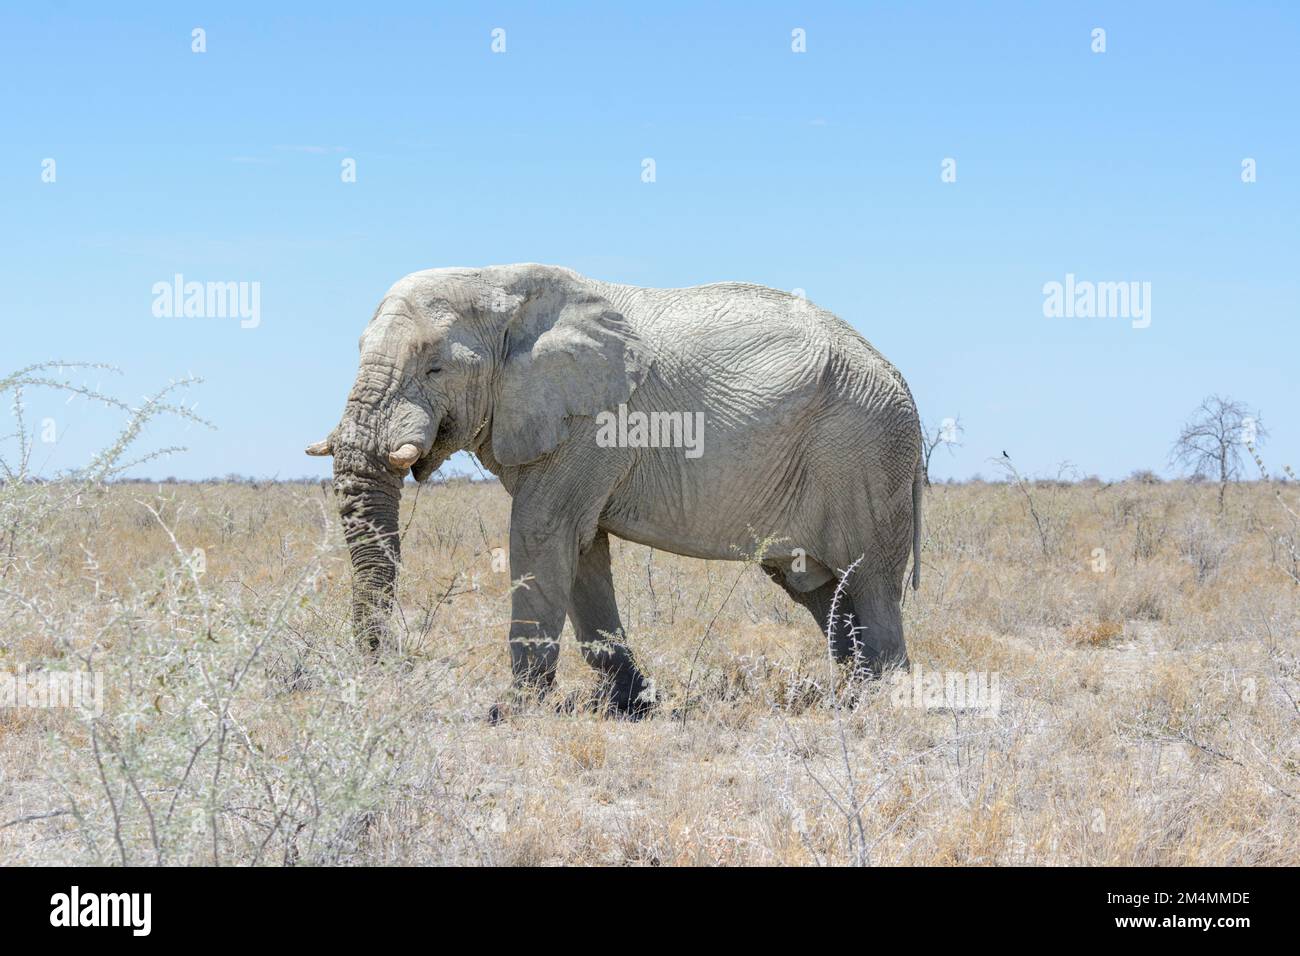 https://c8.alamy.com/comp/2M4MMDE/african-bush-elephant-loxodonta-africana-set-against-a-cloudless-blue-sky-in-etosha-national-park-namibia-southwest-africa-2M4MMDE.jpg